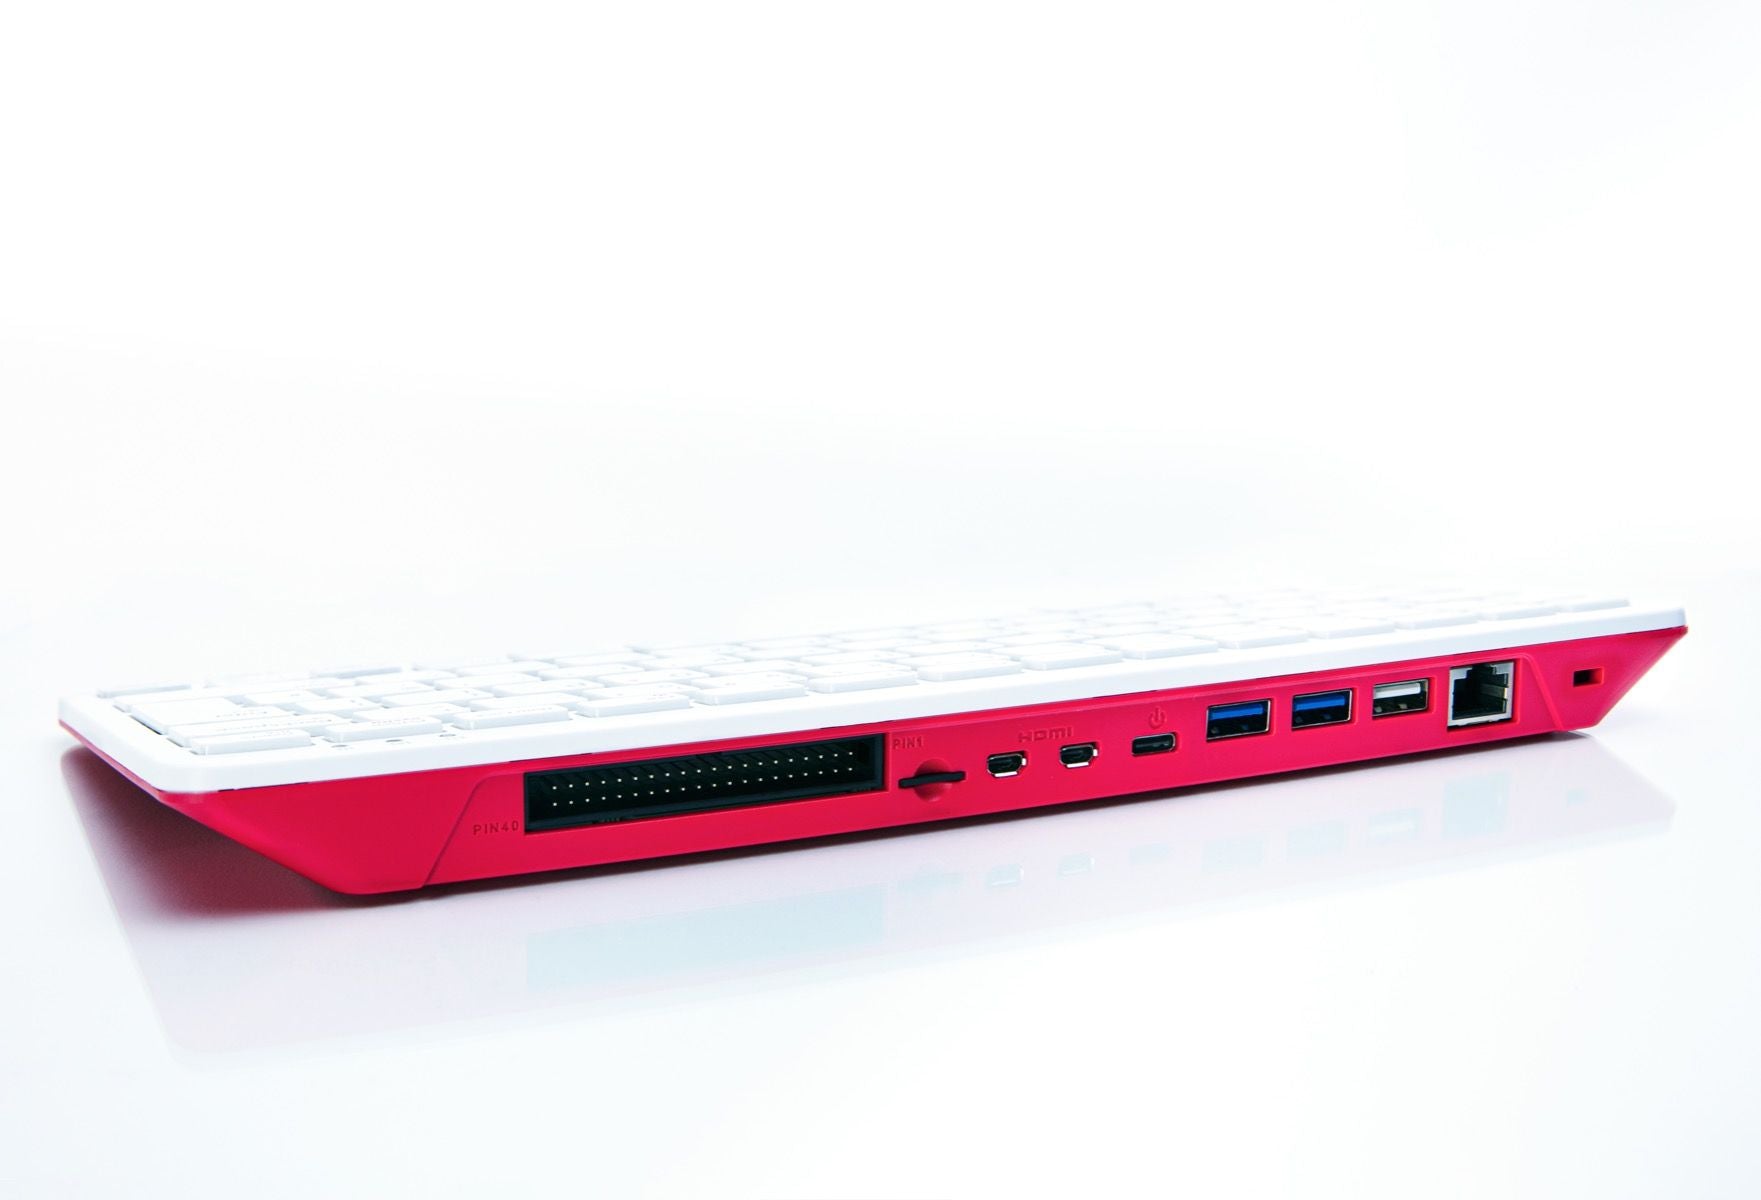 Raspberry Pi 400 unit